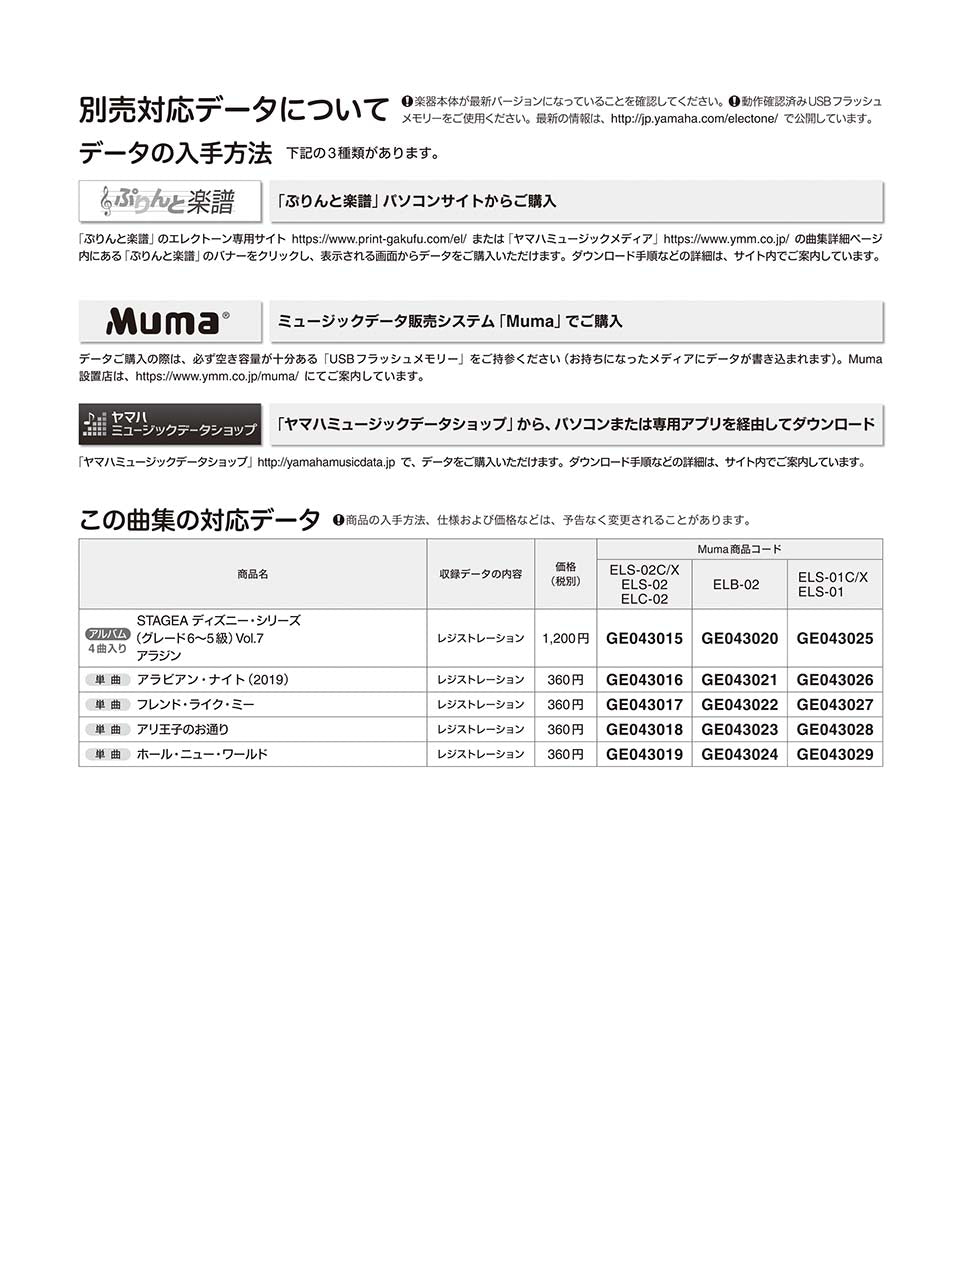 STAGEA ディズニー 6～5級 Vol.7 アラジン_1